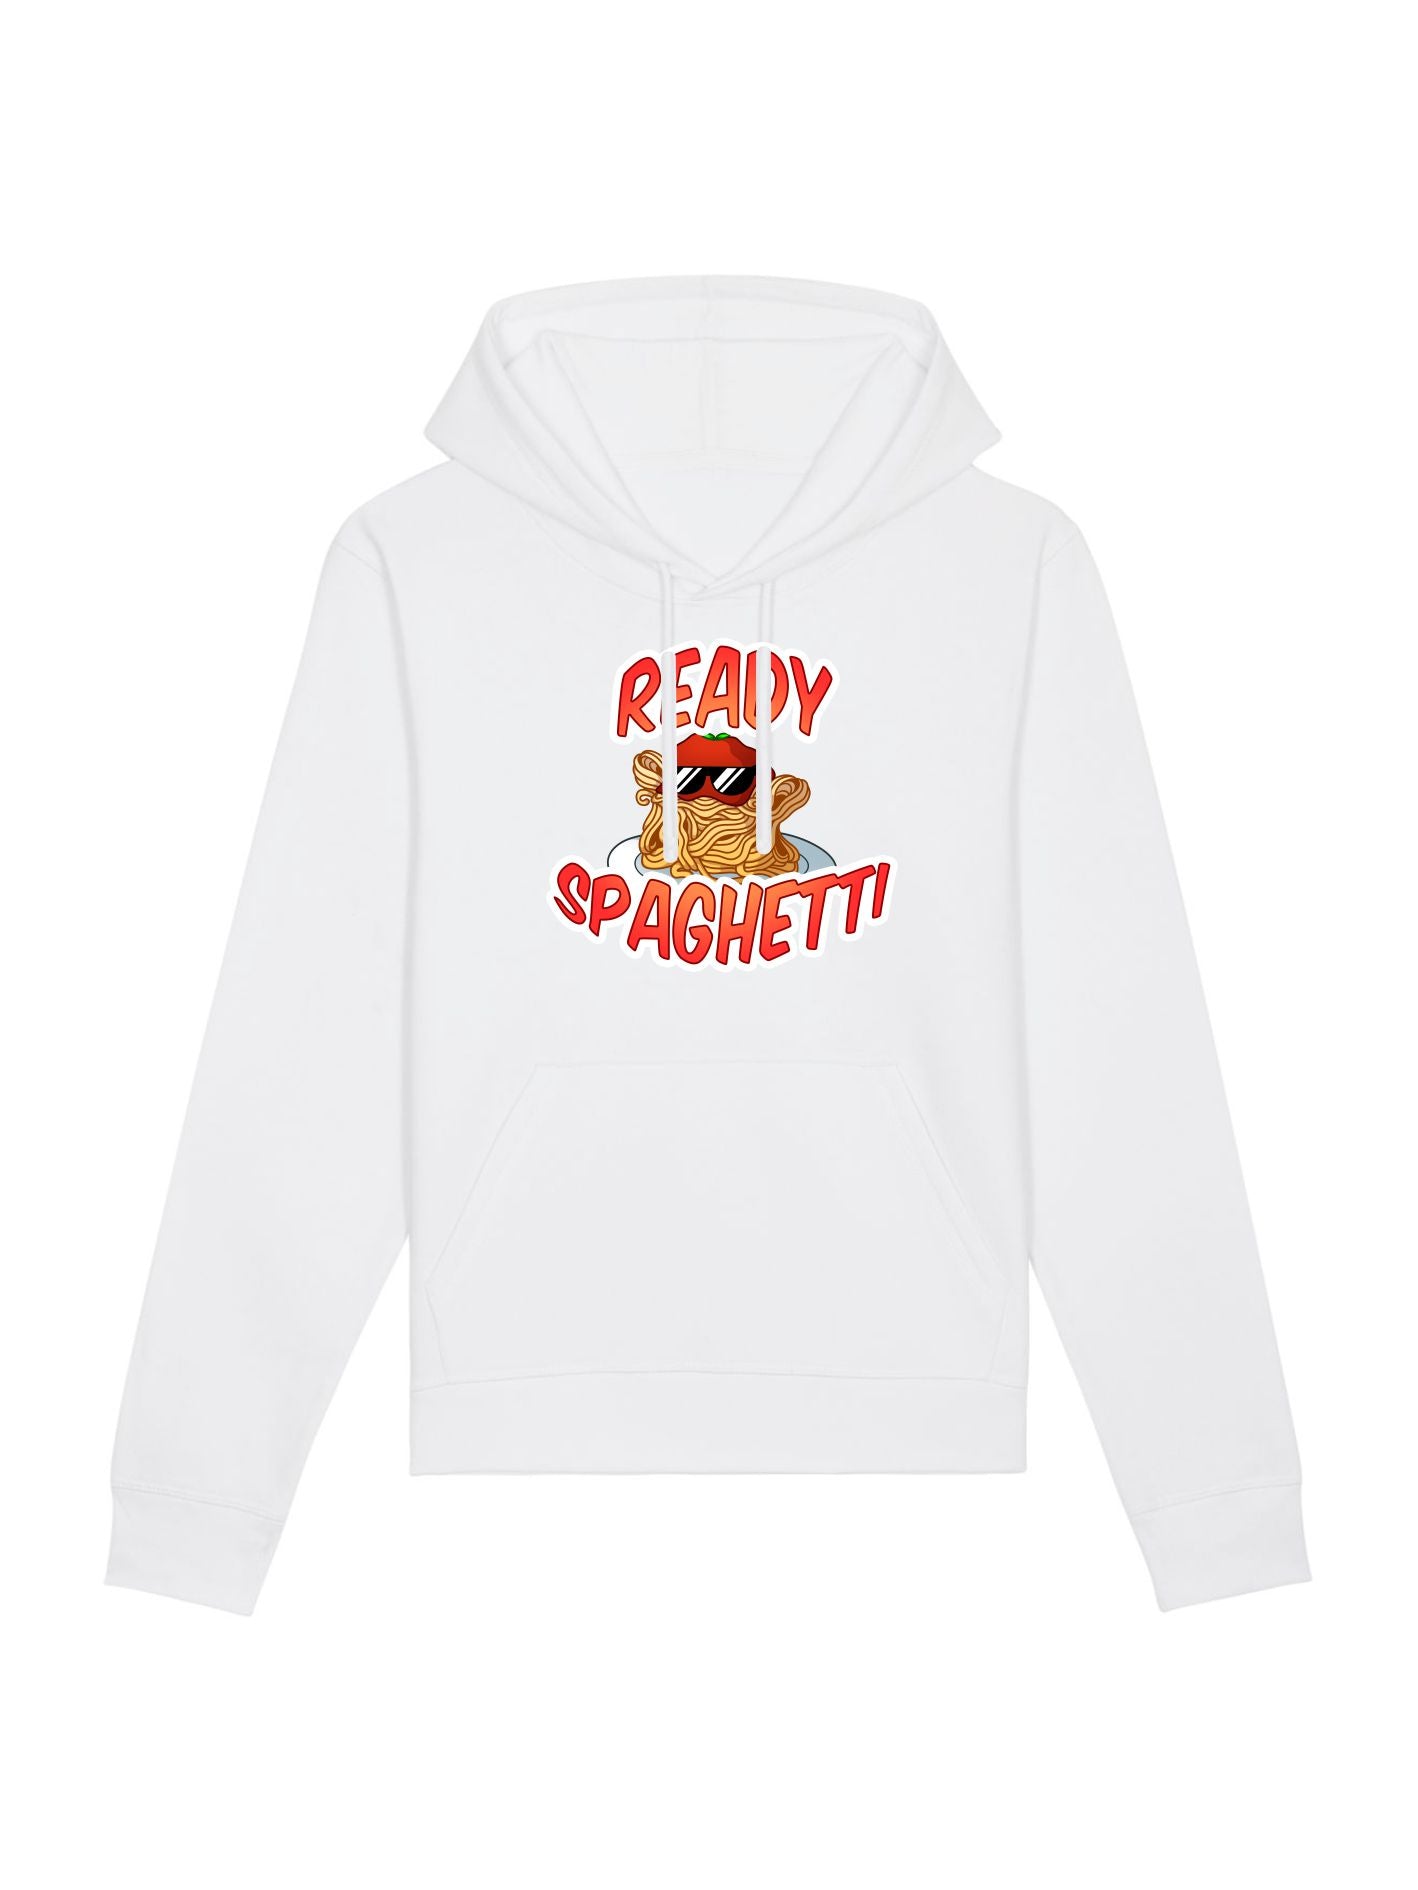 Ready Spaghetti - Hoodie